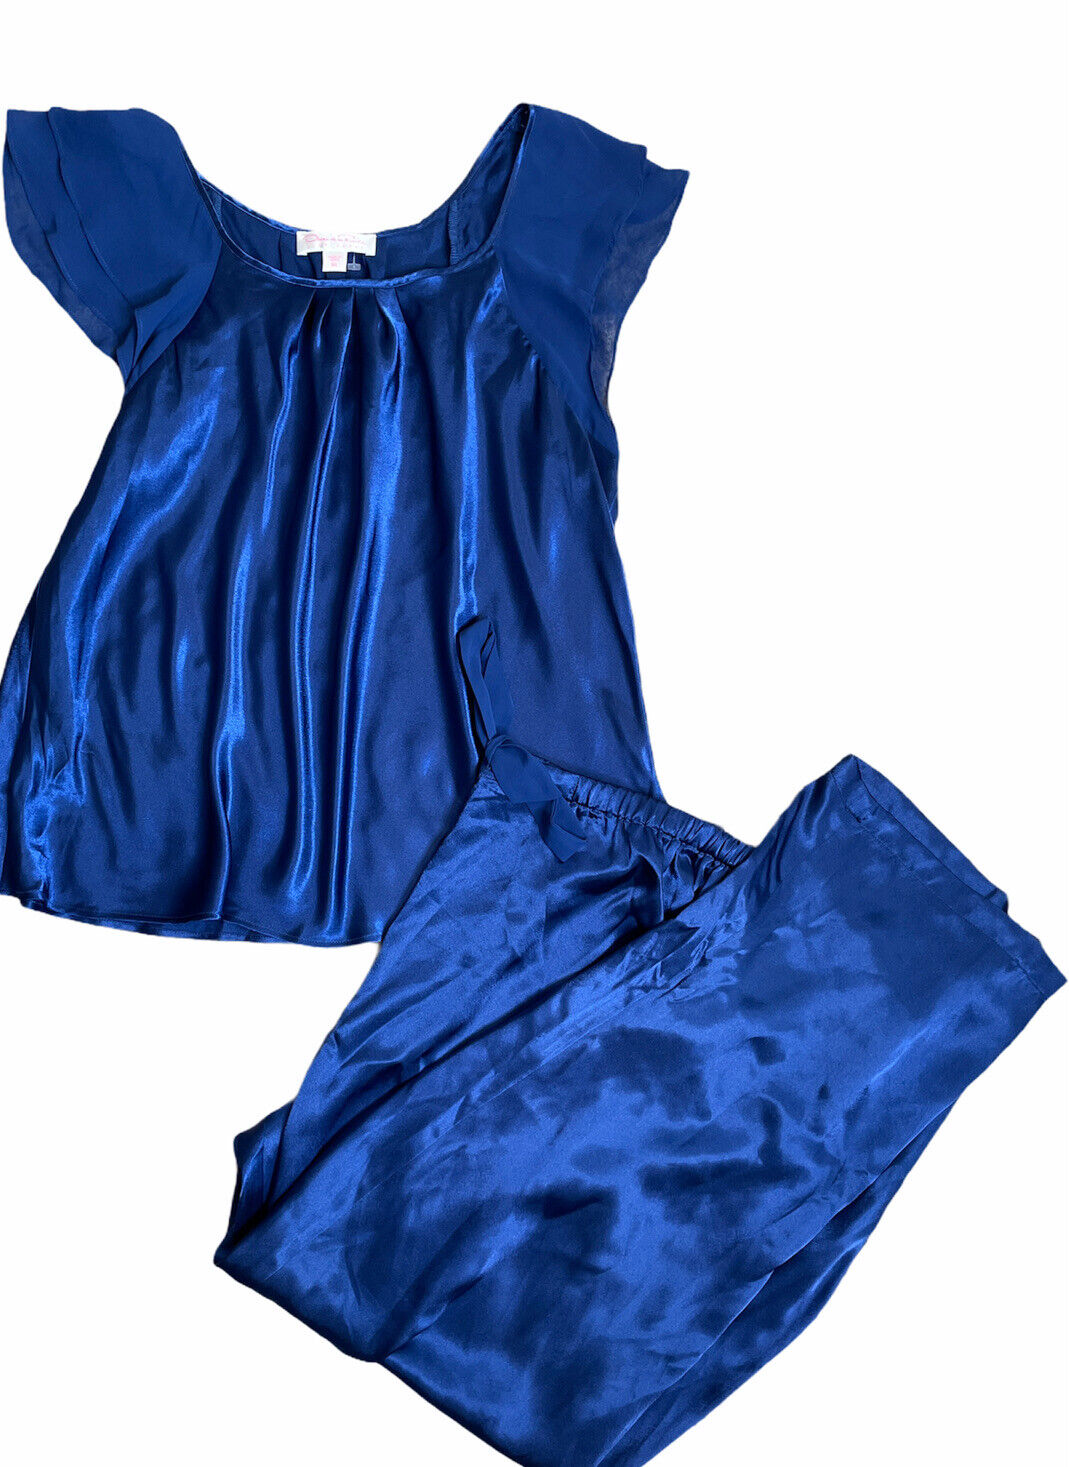 Oscar de la Renta pink label Blue Satin Pajamas XL chiffon Sleeves